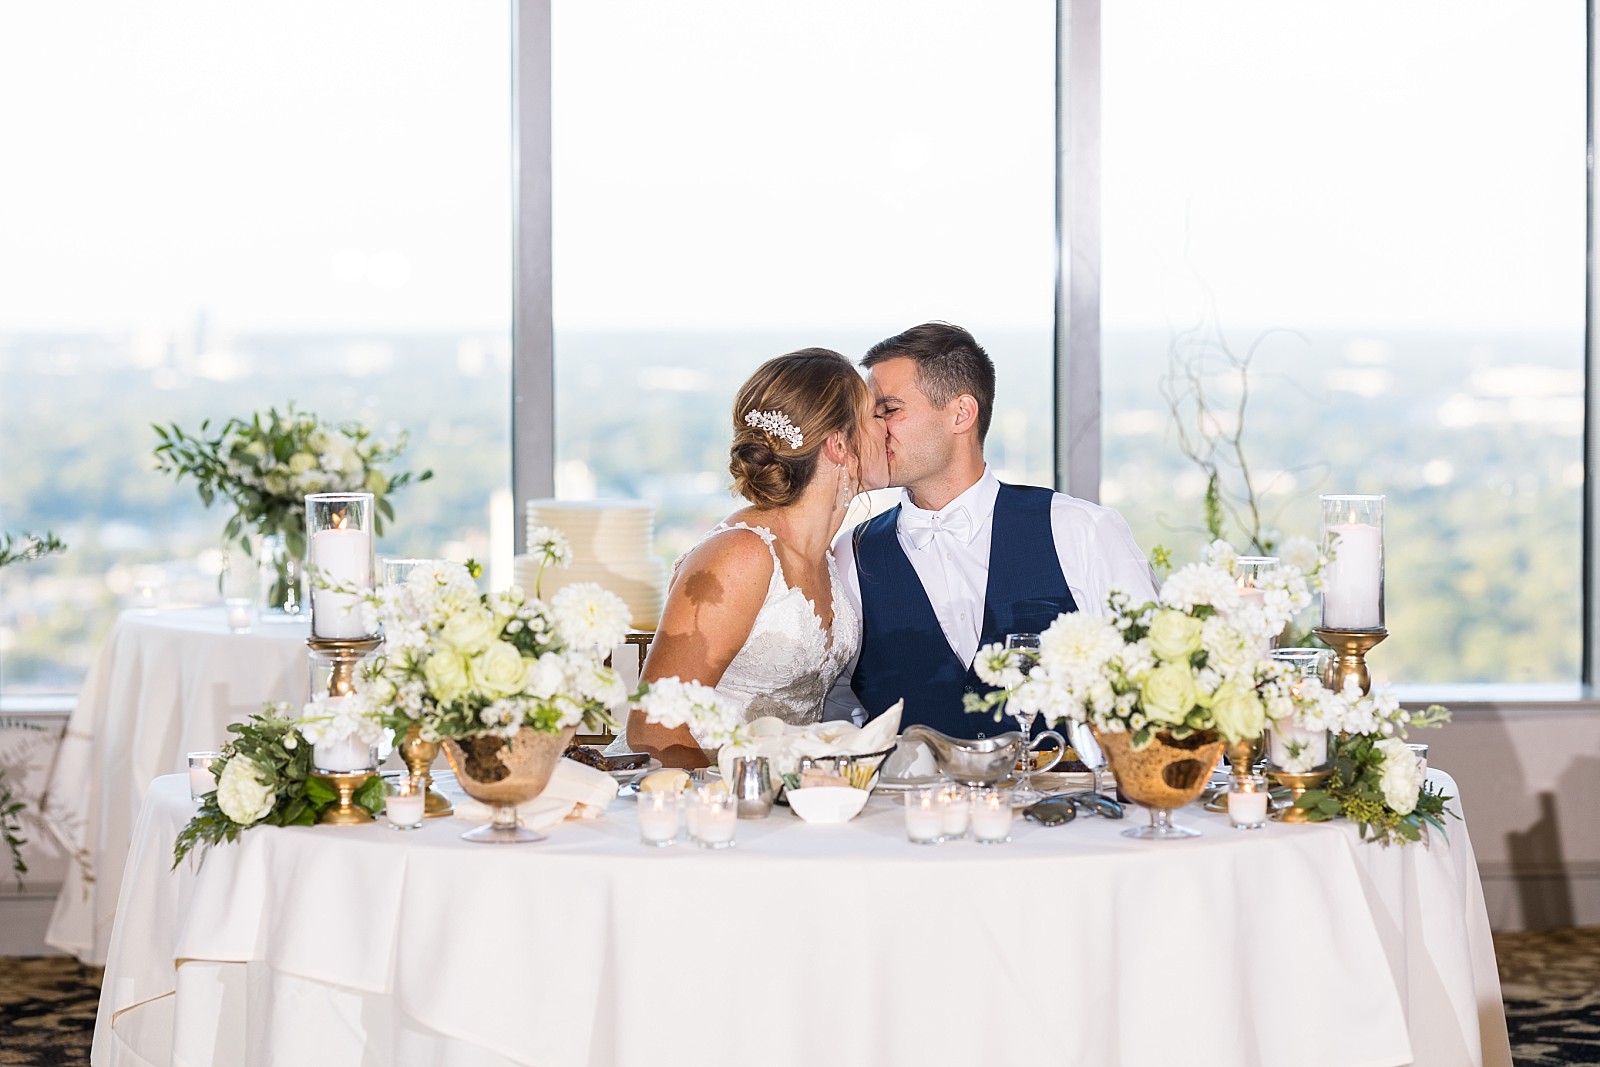 Bride and groom kissing at sweetheart table | Raleigh Wedding Photographer Sarah Hinckley